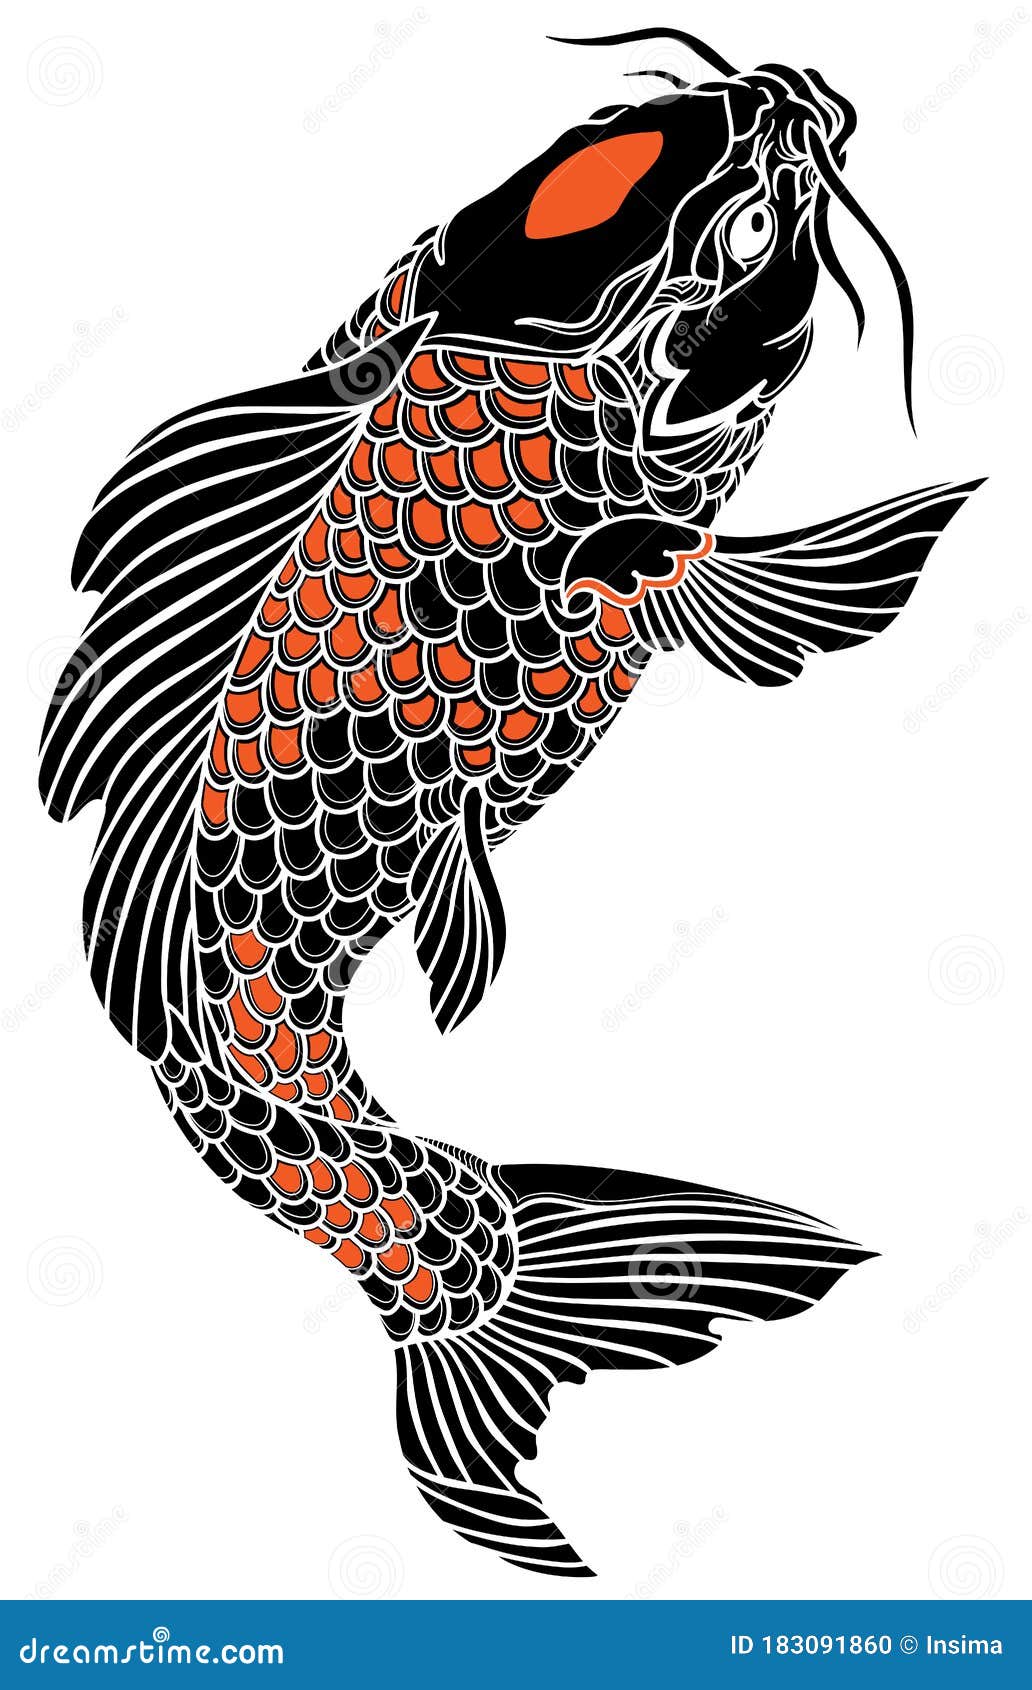 Black and Red Japanese Koi Carp Fish Stock Vector - Illustration of symbol, japanese: 183091860